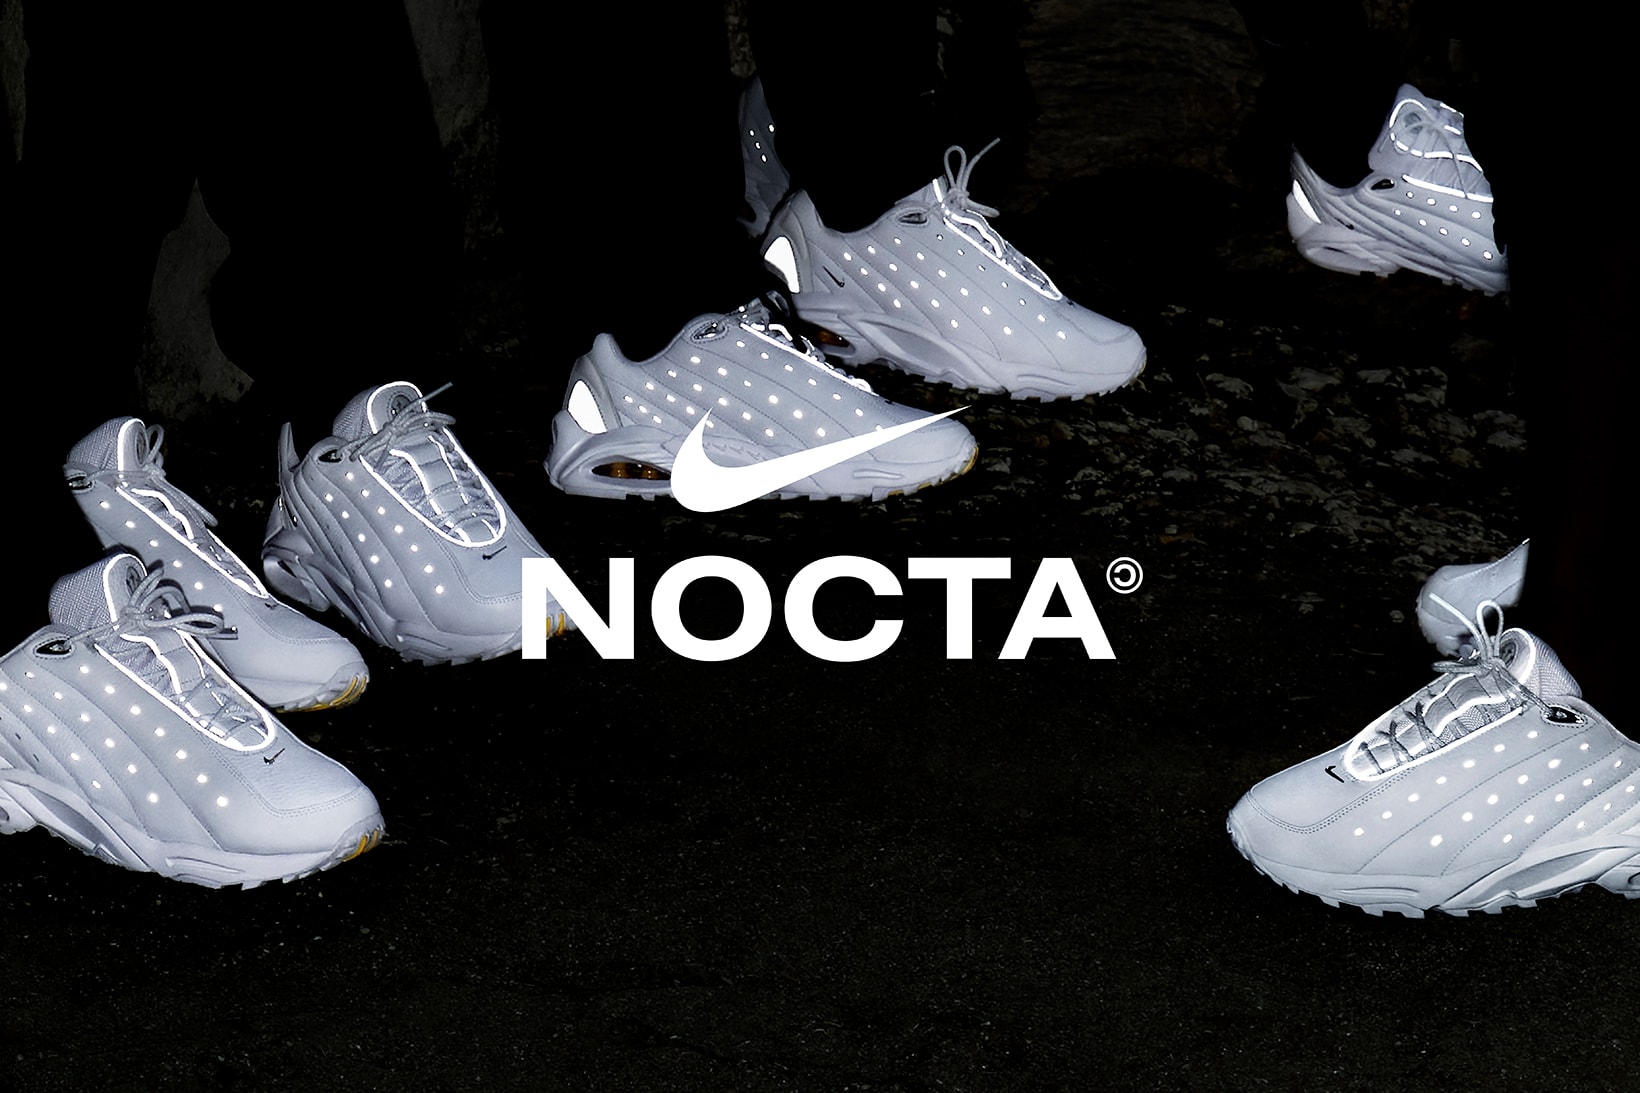 Drake NOCTA Nike Hot Step Air Terra Triple White Collaboration Sneakers Footwear Shoes Kicks